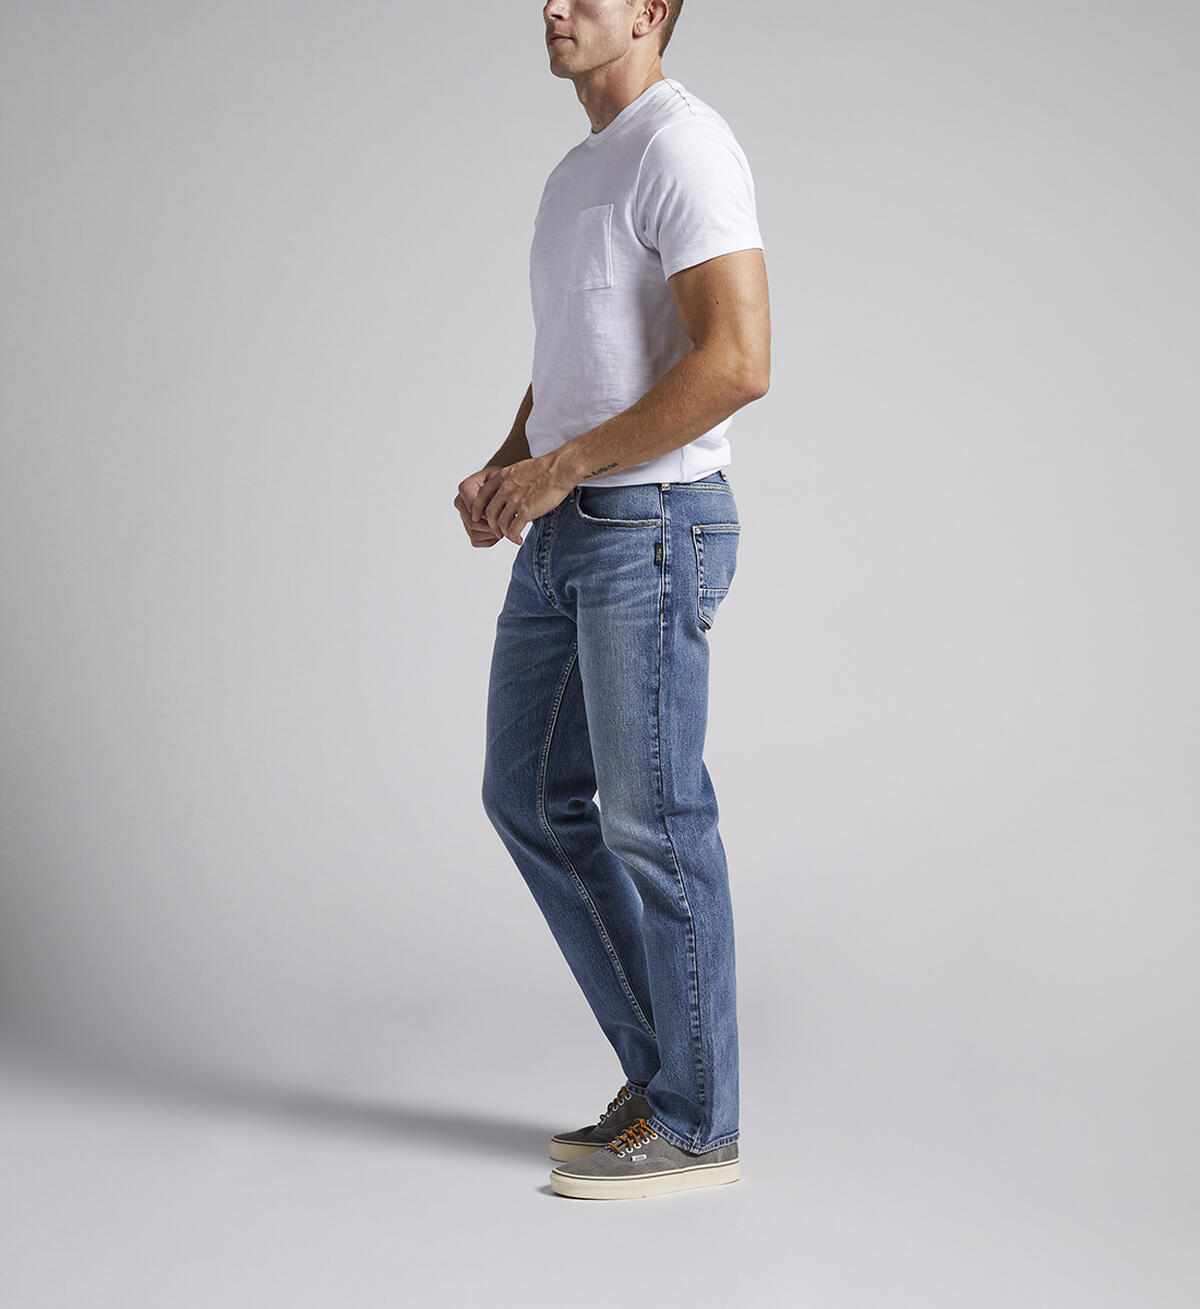 Polson Slim Fit Slim Straight Leg Jeans, Indigo, hi-res image number 2